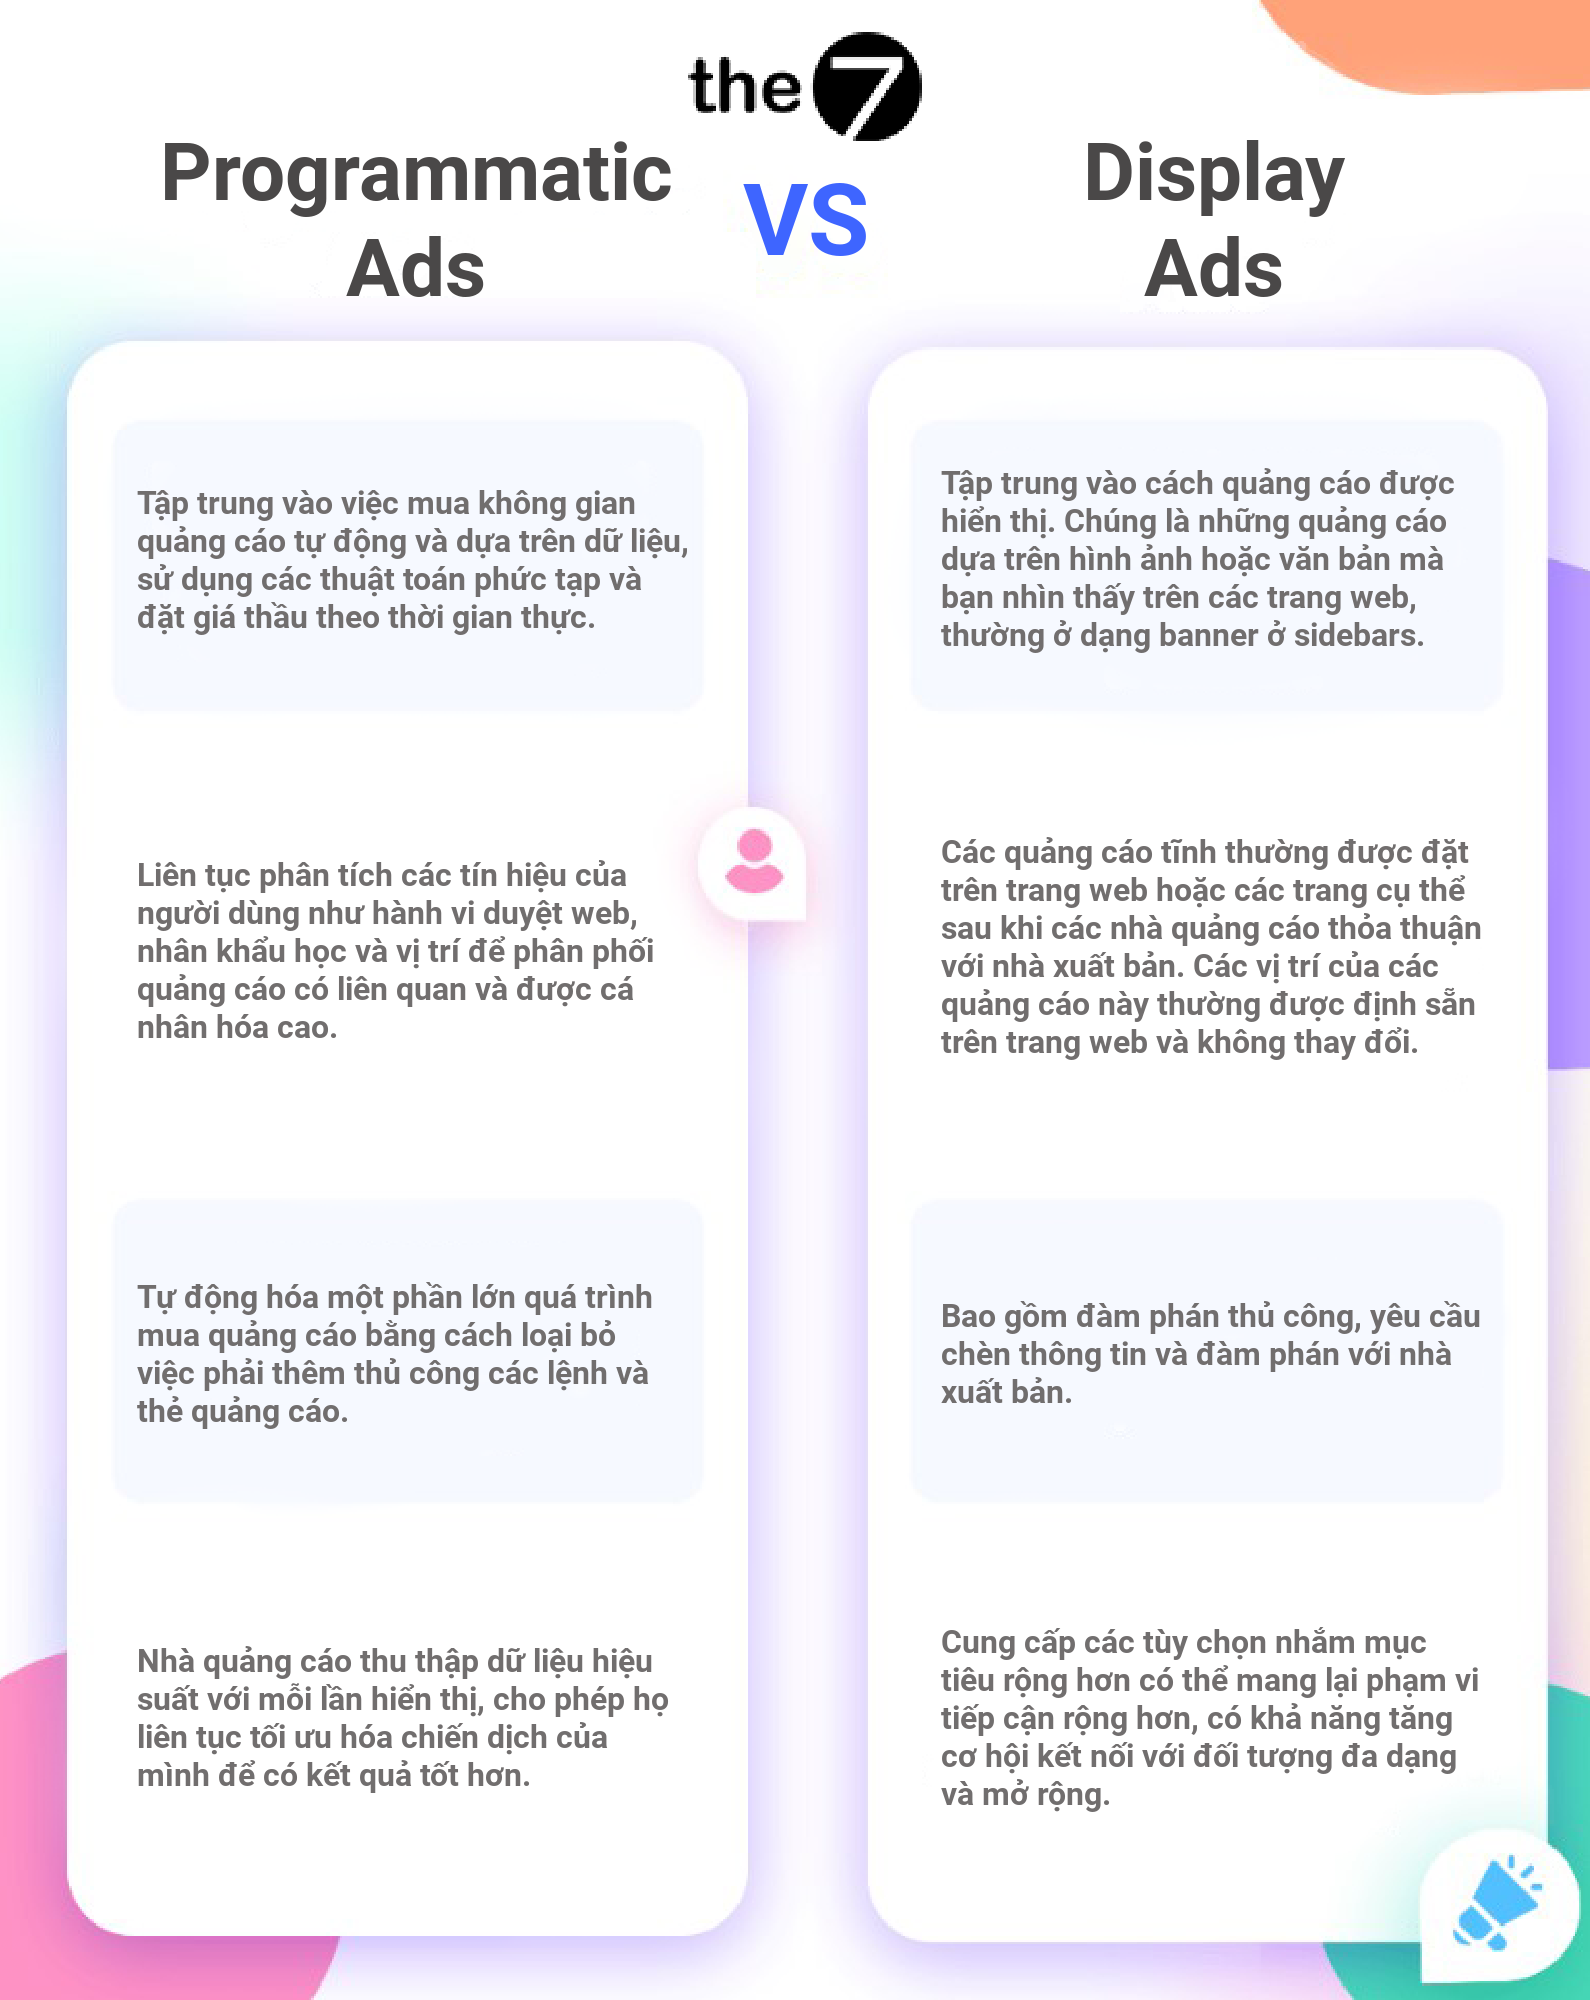 Programmatic Ads vs Display Ads